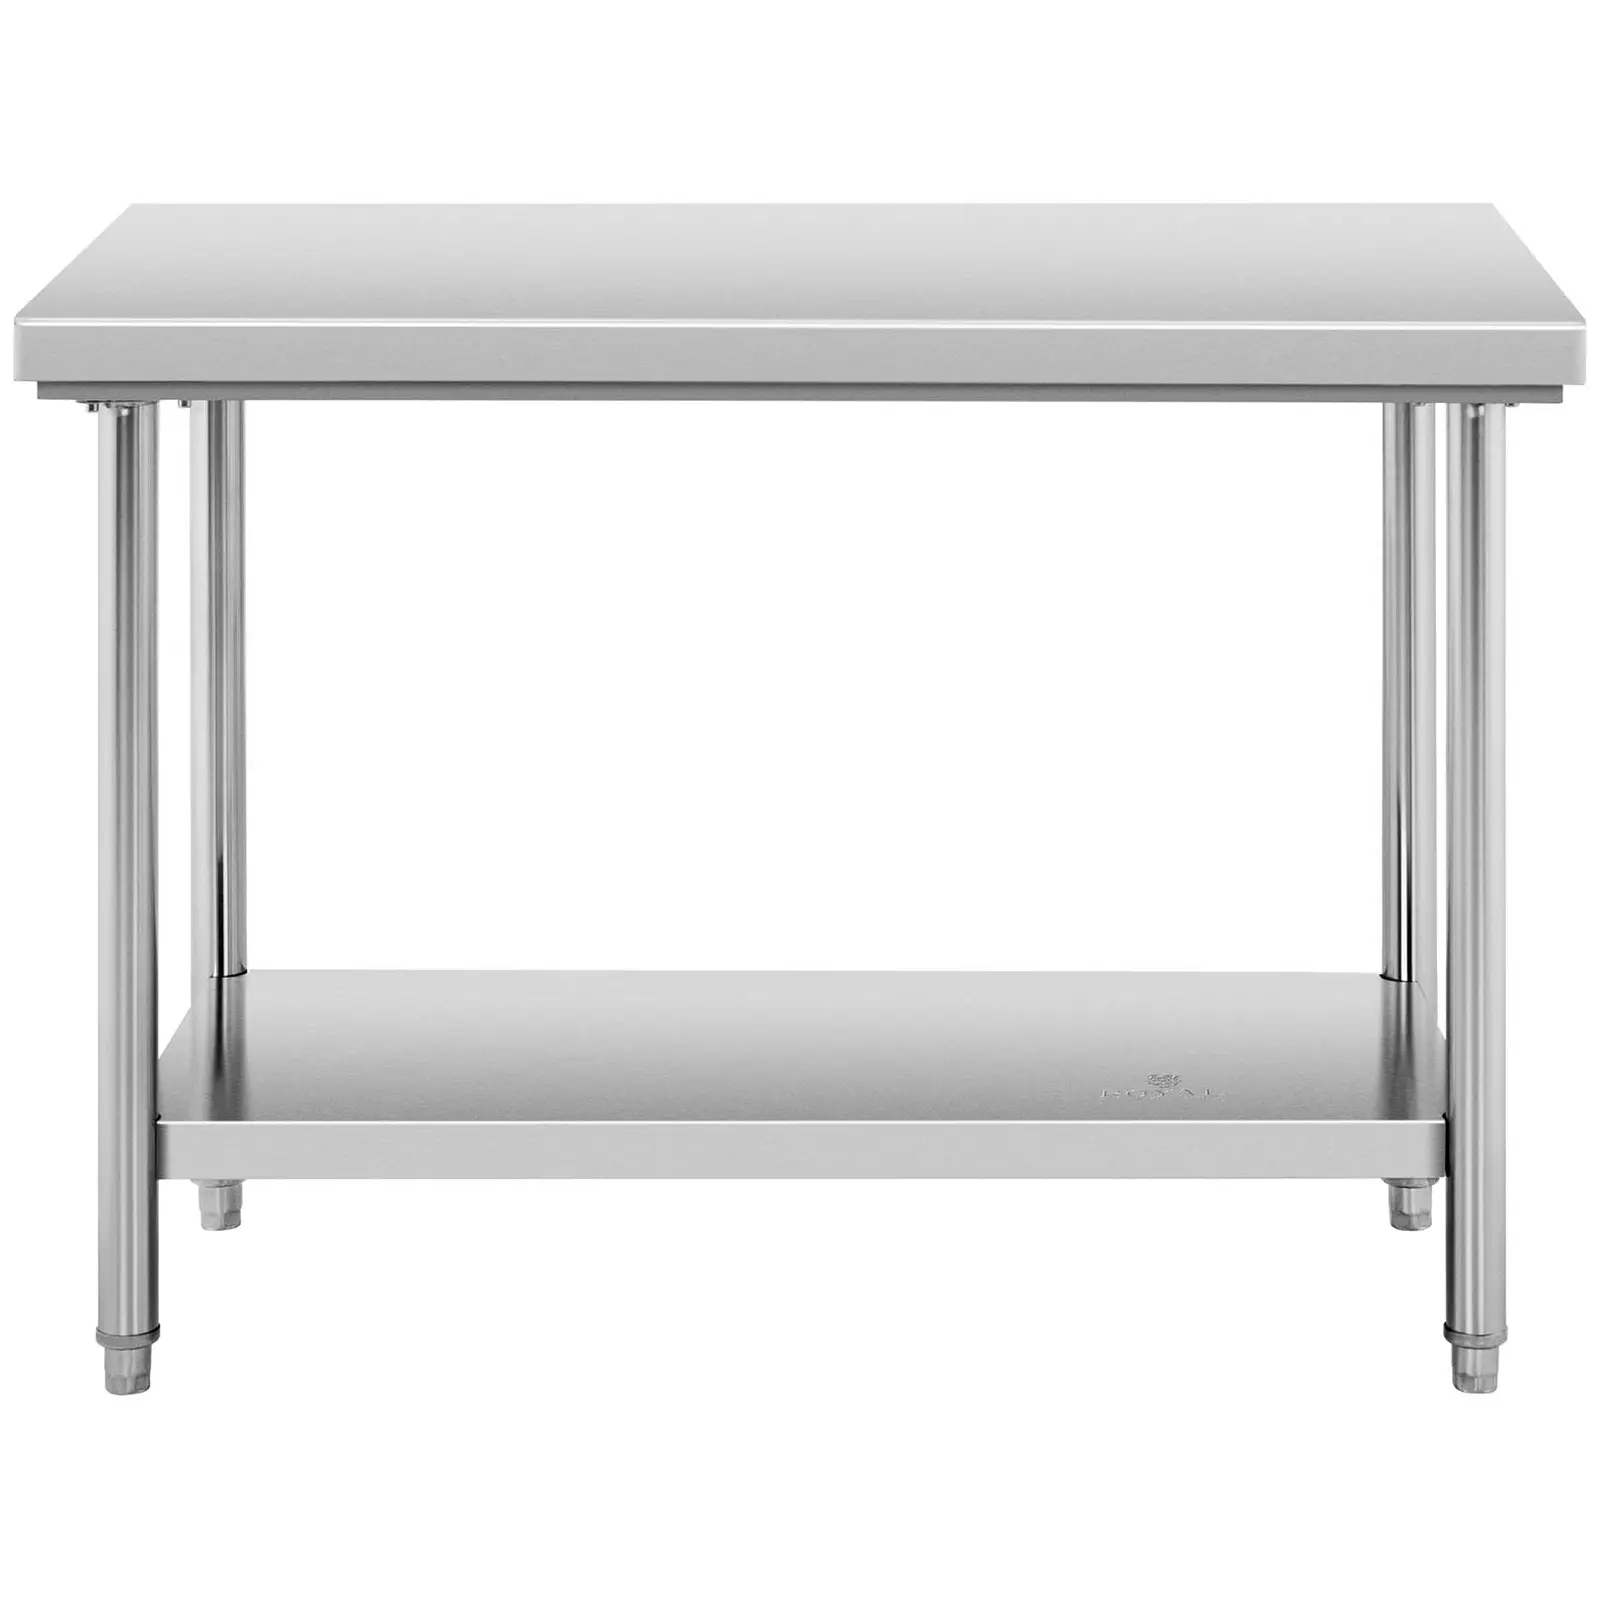 Stainless Steel Work Table - 120 x 70 cm - 143 kg capacity